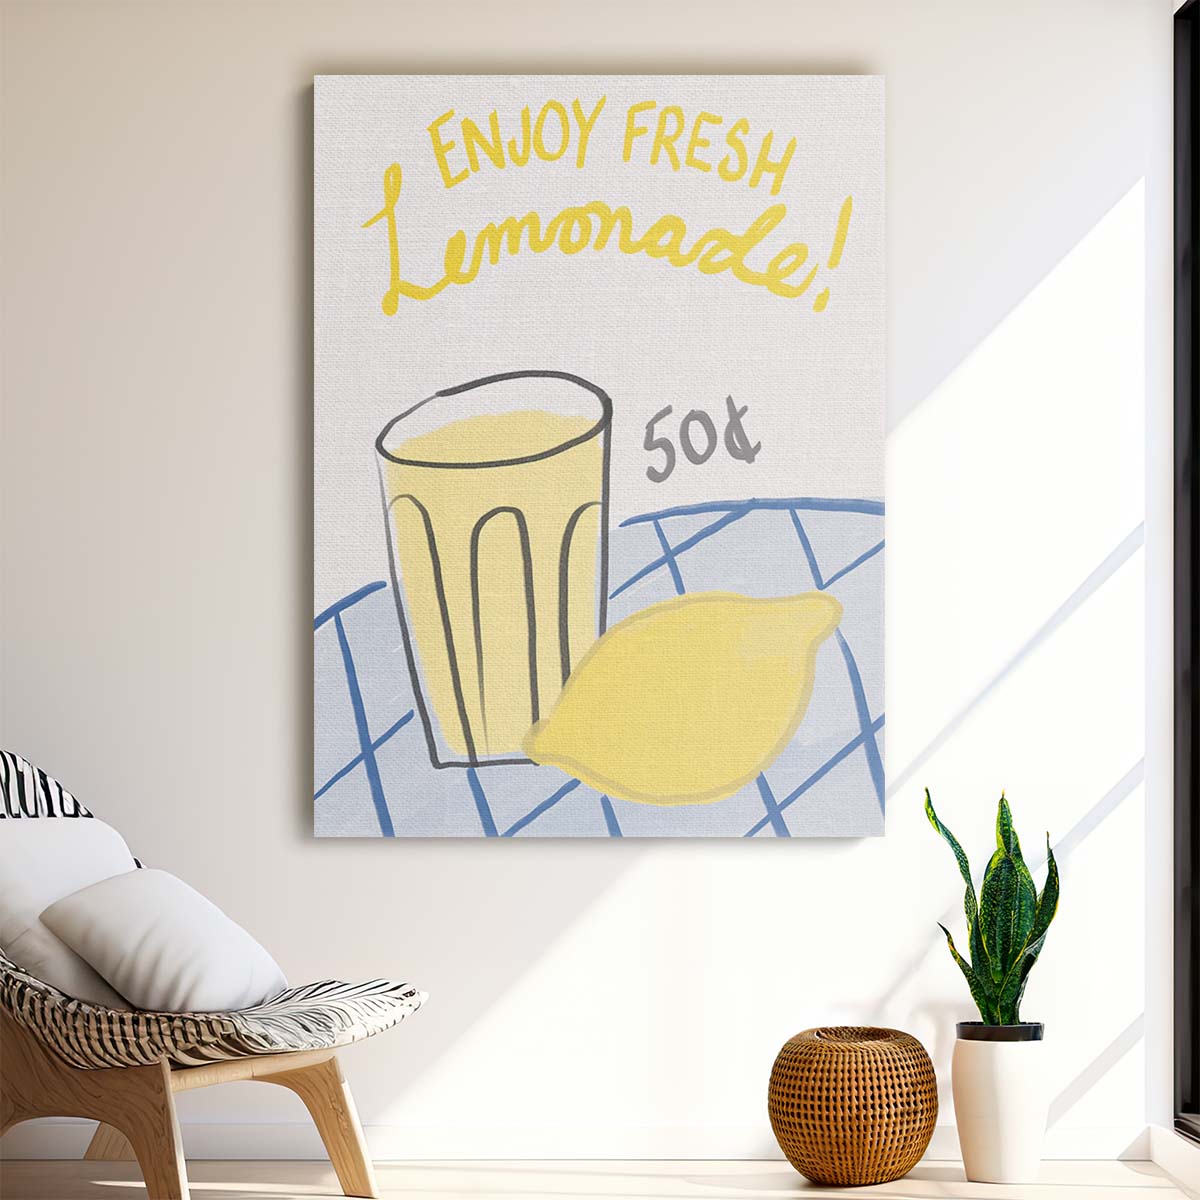 Bright Lemonade Illustration, Fresh Citrus Kitchen Wall Art by Luxuriance Designs, made in USA